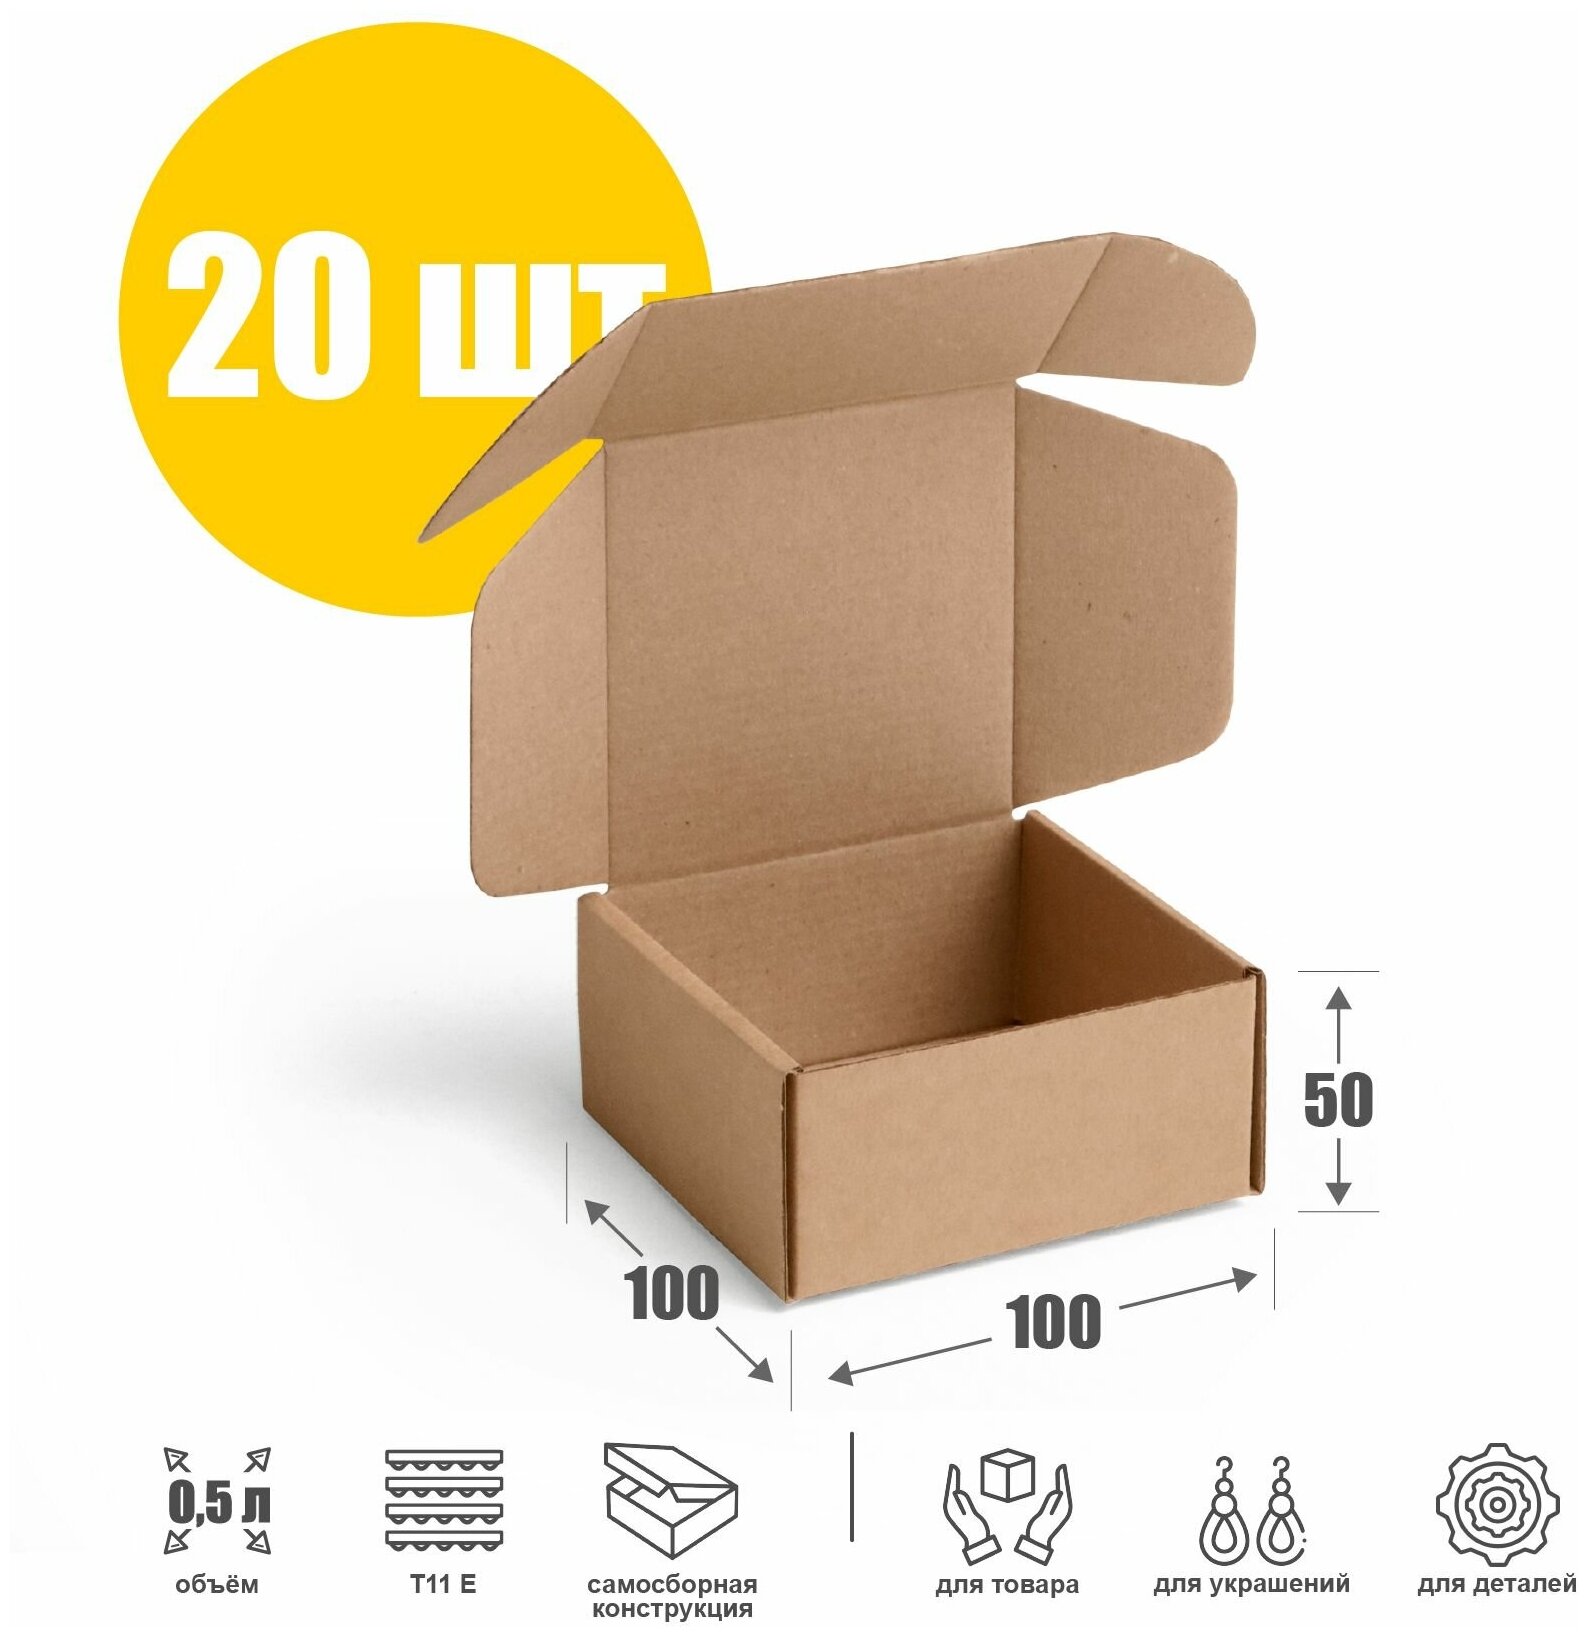 Маленькая картонная коробочка 100х100х50 мм (Т11 Е), бурая - 20 шт. Упаковка для украшений 10х10х5 см.